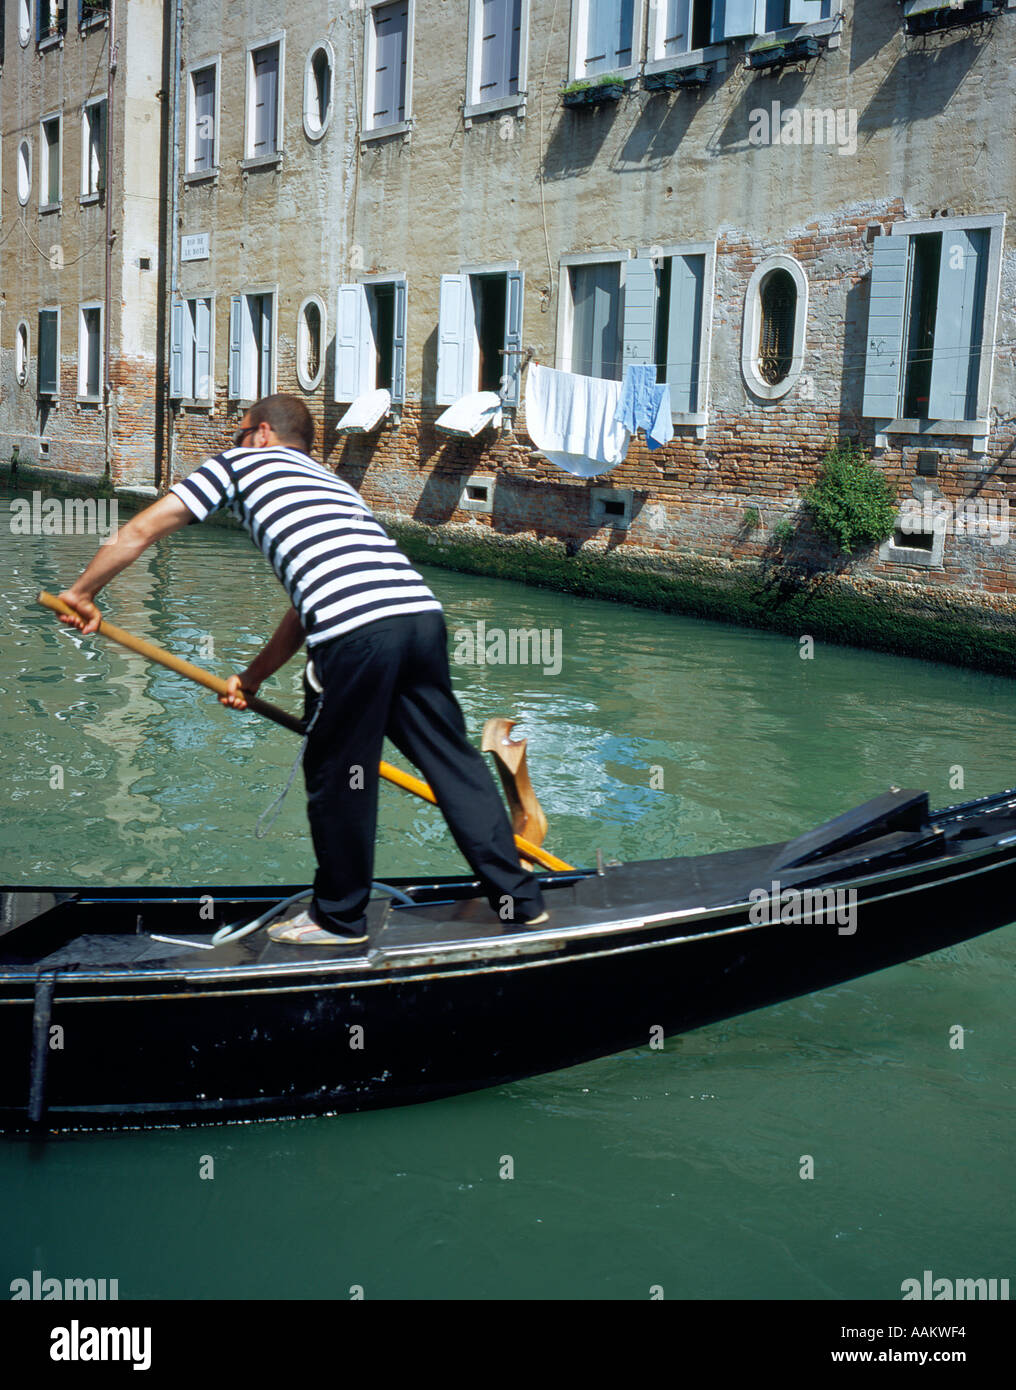 gondolieri rowing Venice Italy Europe. Photo by Willy Matheisl Stock Photo